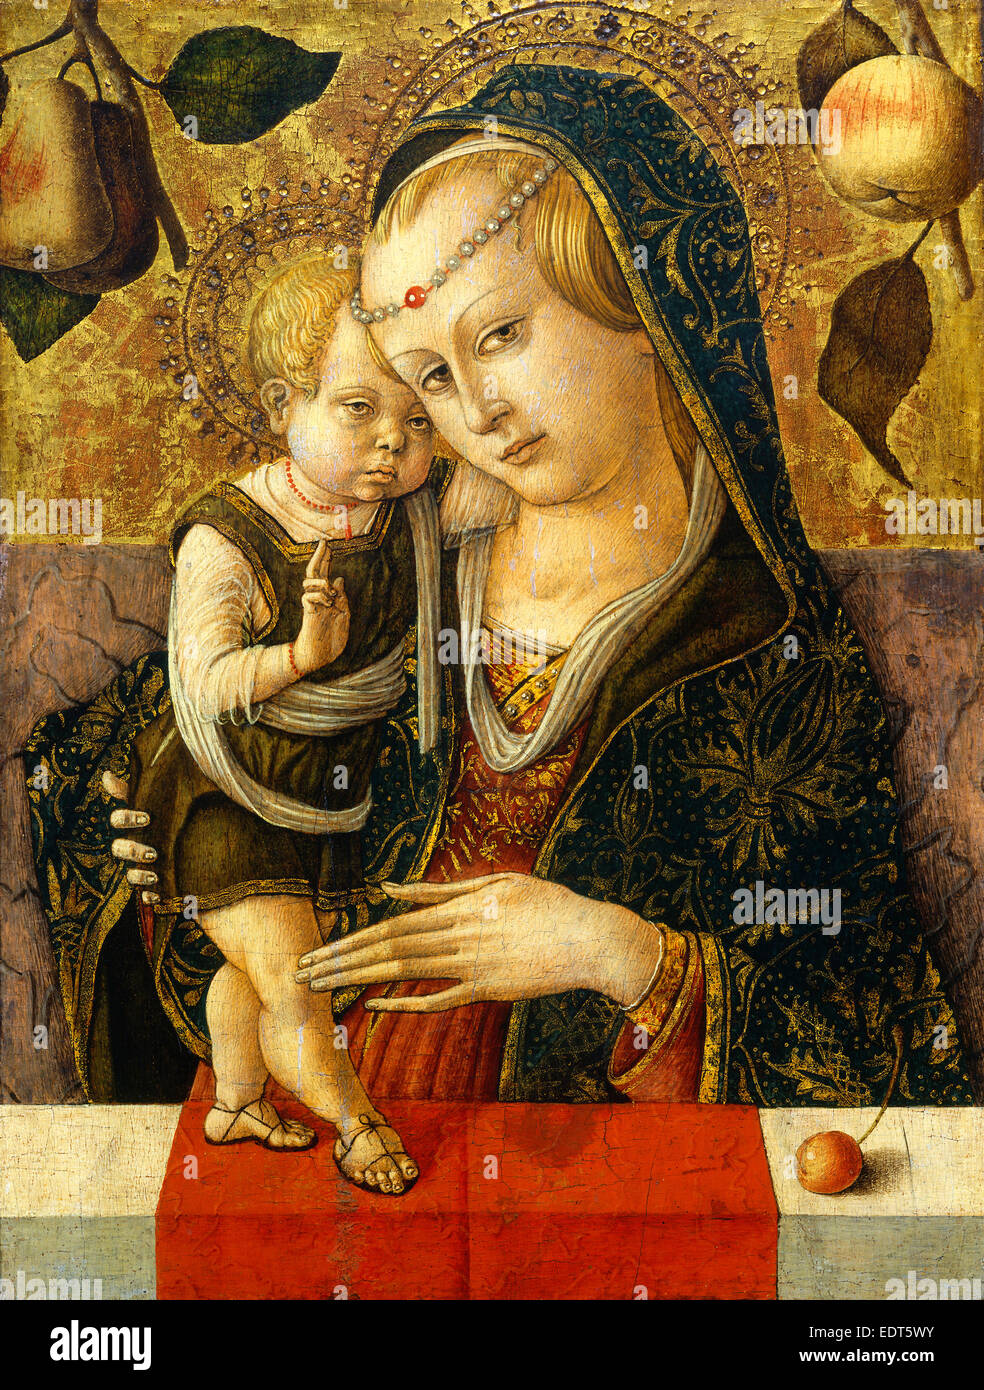 Carlo Crivelli, Madonna and Child, Italian, c. 1430-1435-1495, c. 1490, tempera on panel Stock Photo